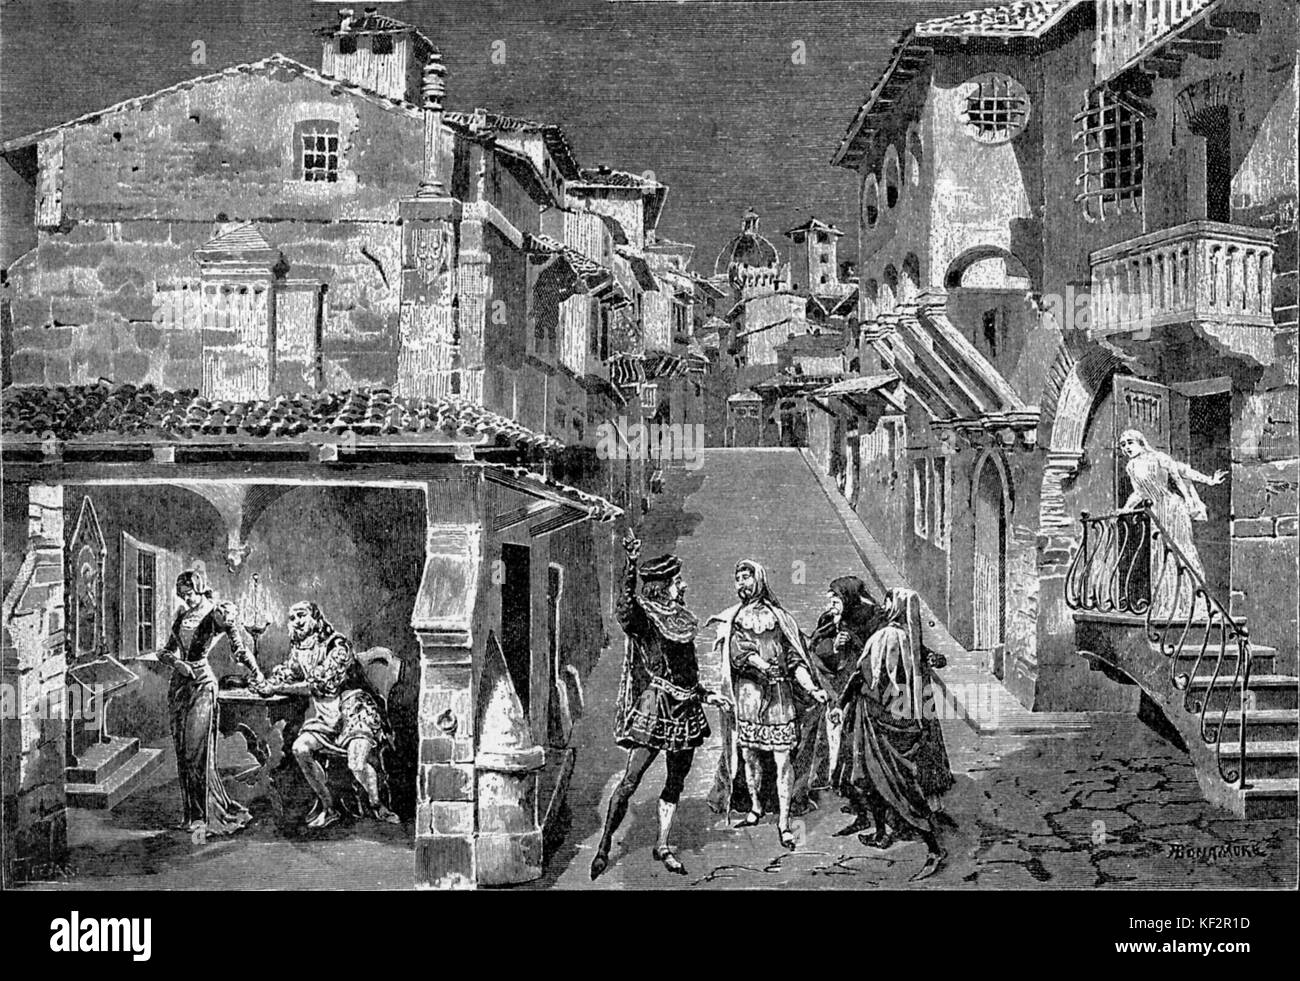 I Medici - opera by Ruggero Leoncavallo, Act III. The Settimino. Drawing by A Bonamore. Stock Photo